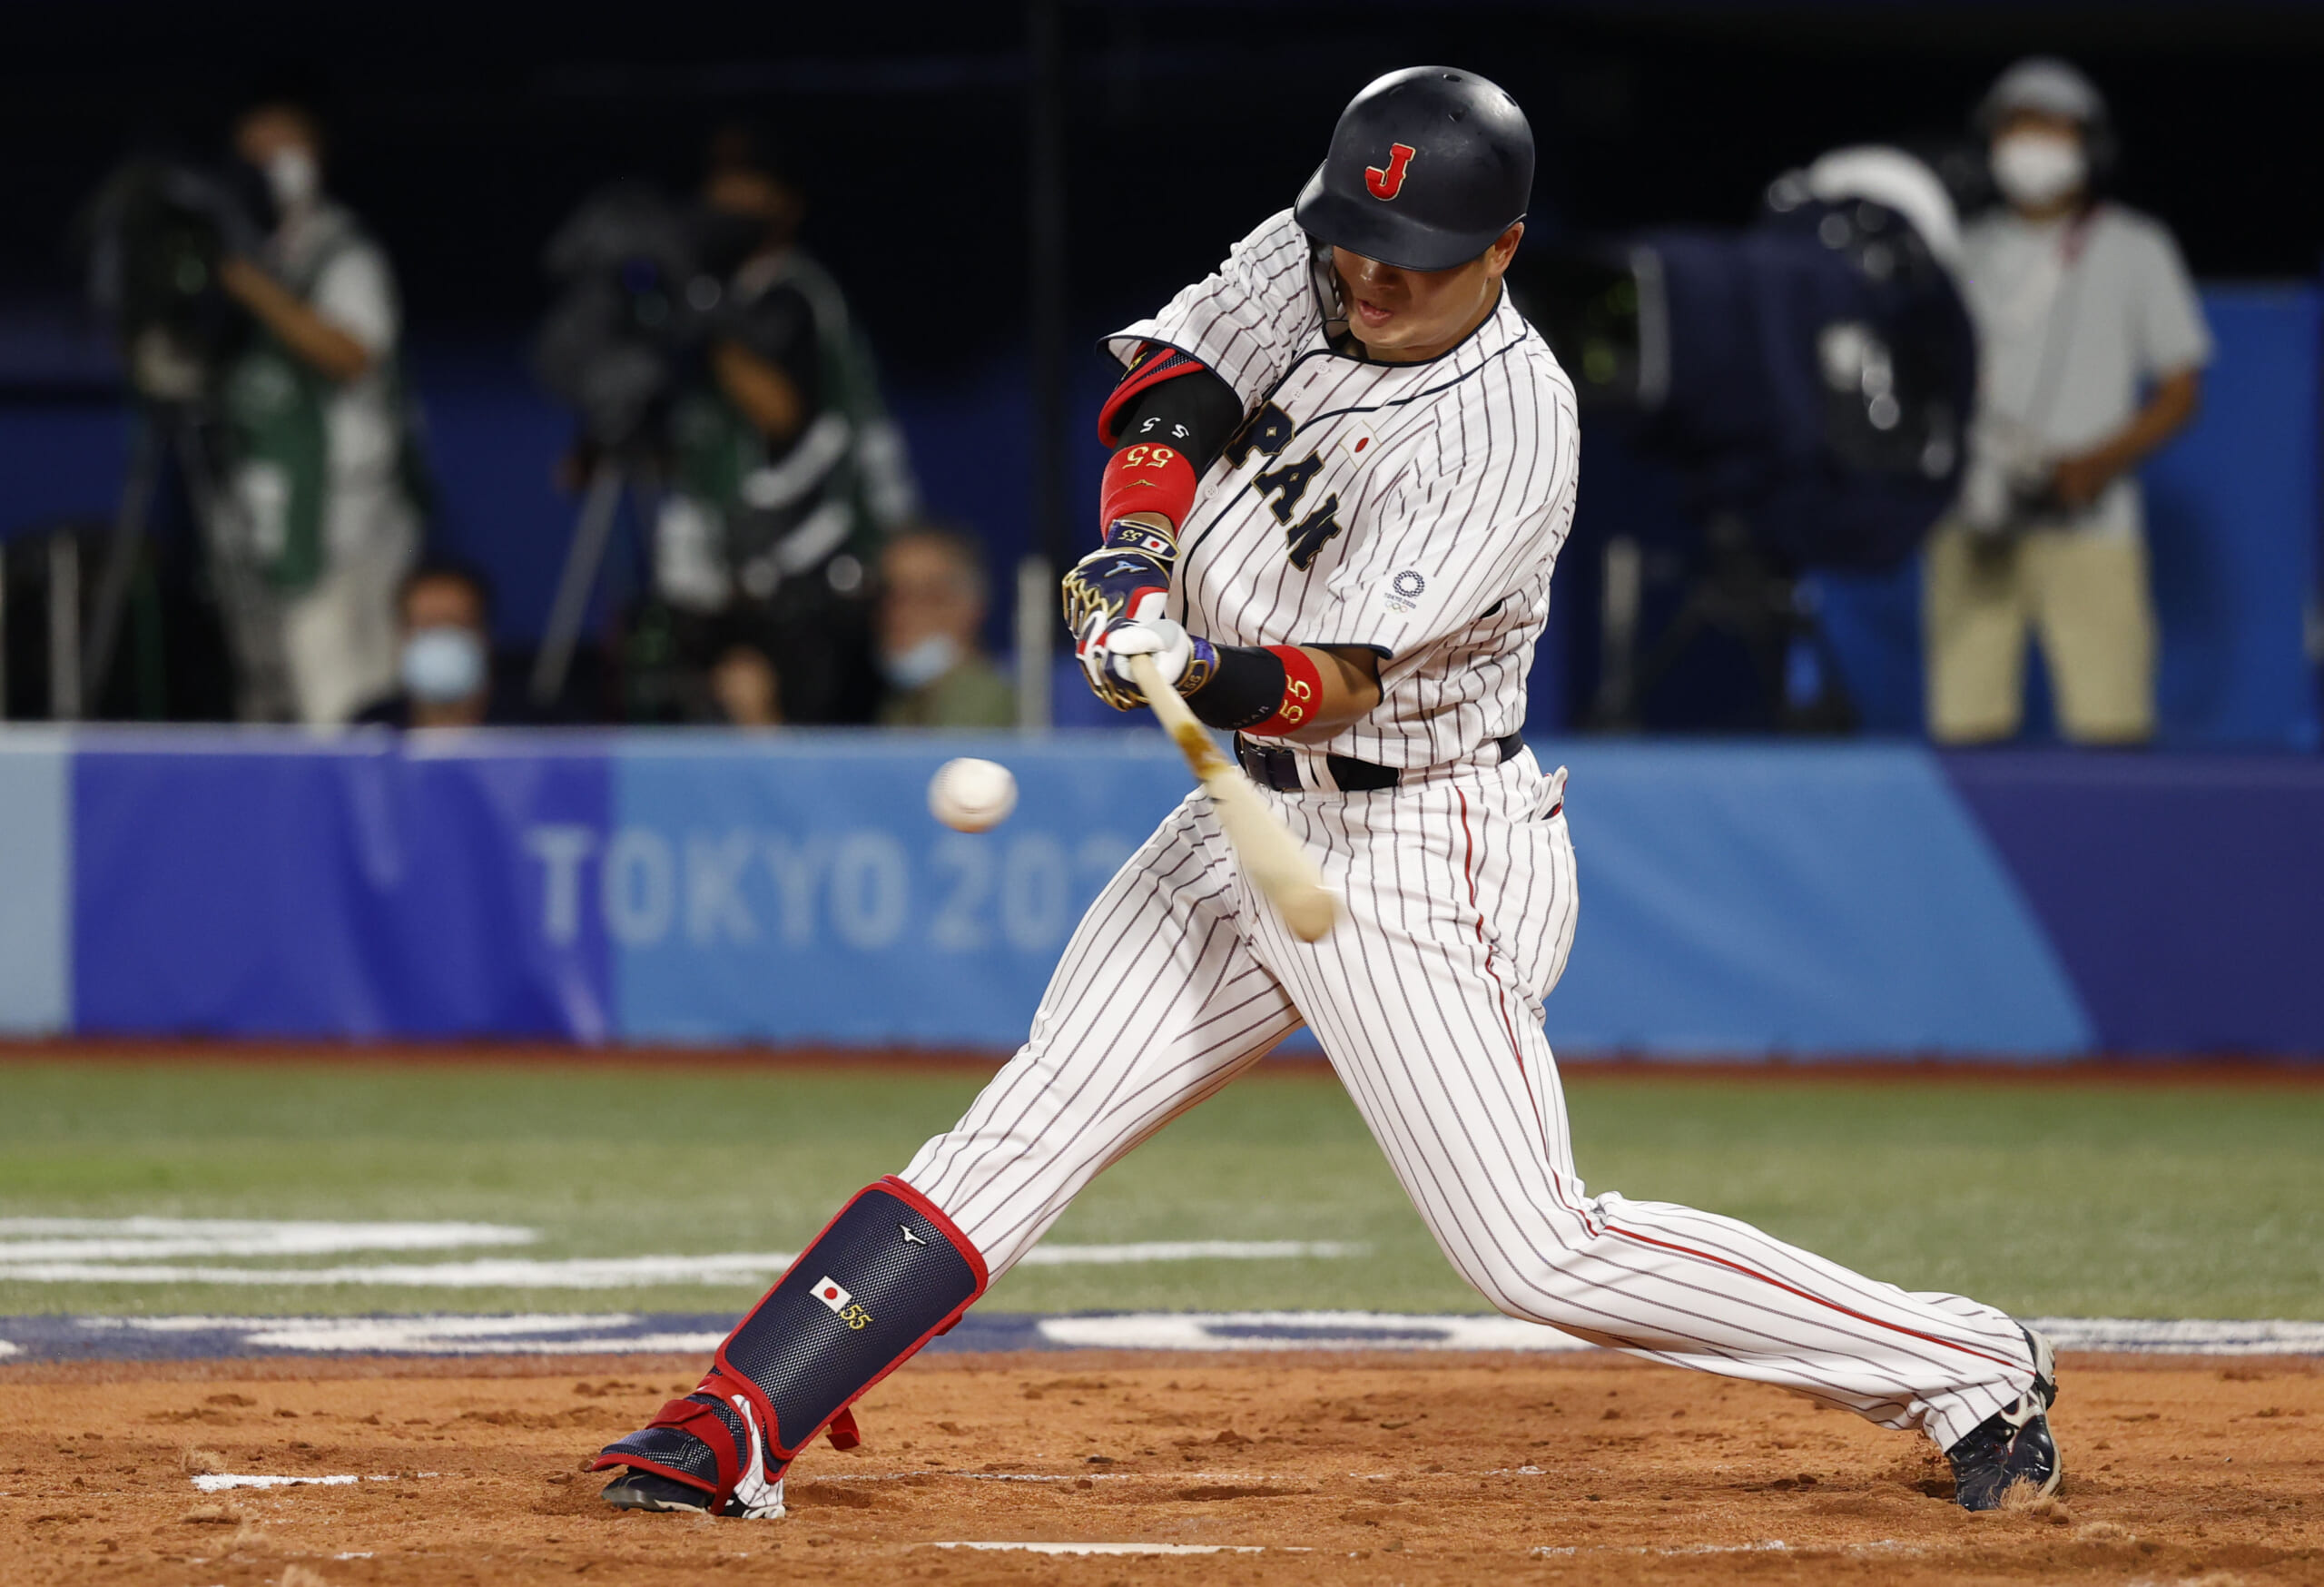 The next Hideki Matsui? Yankees could land Japanese superstar